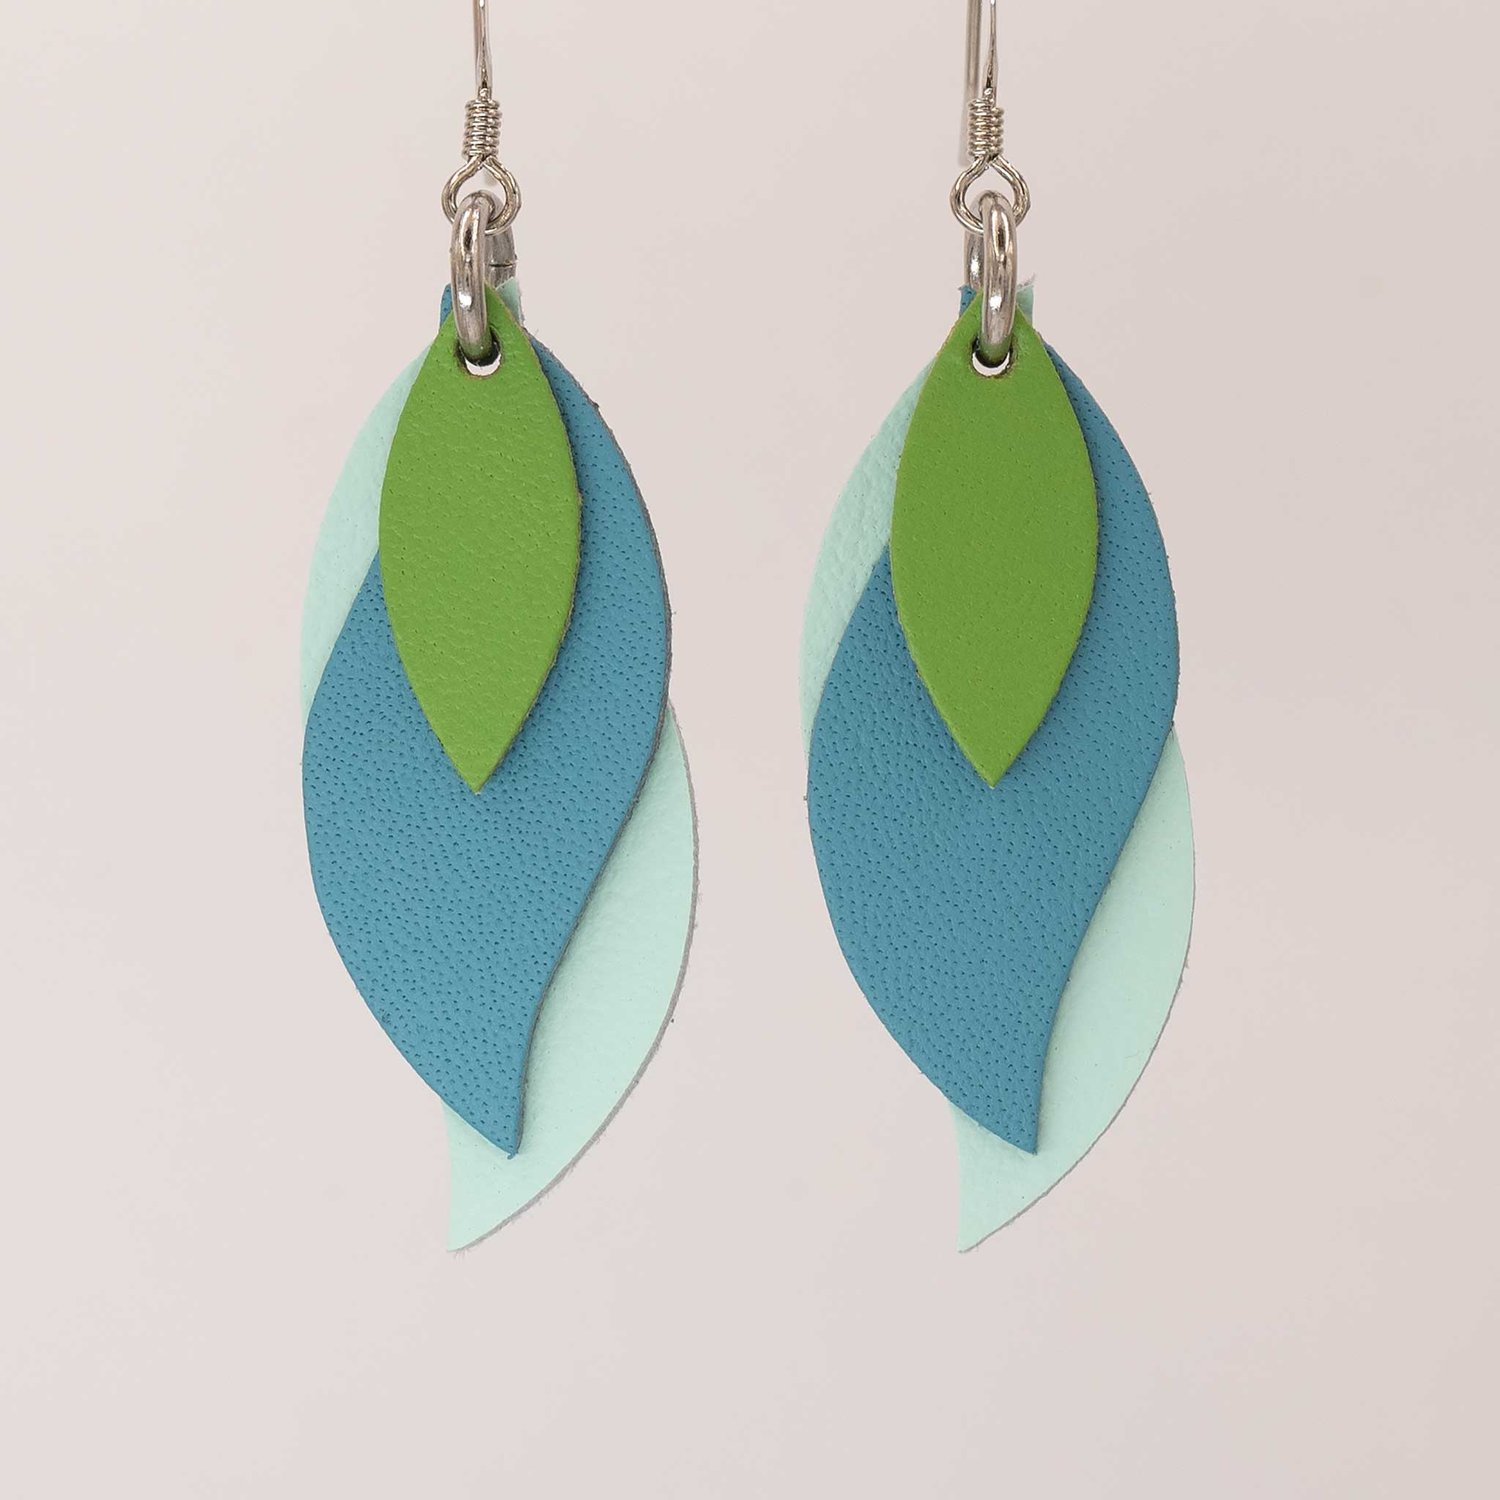 Image of Handmade Australian leather leaf earrings - Lime green, blue, mint green [LBG-517]